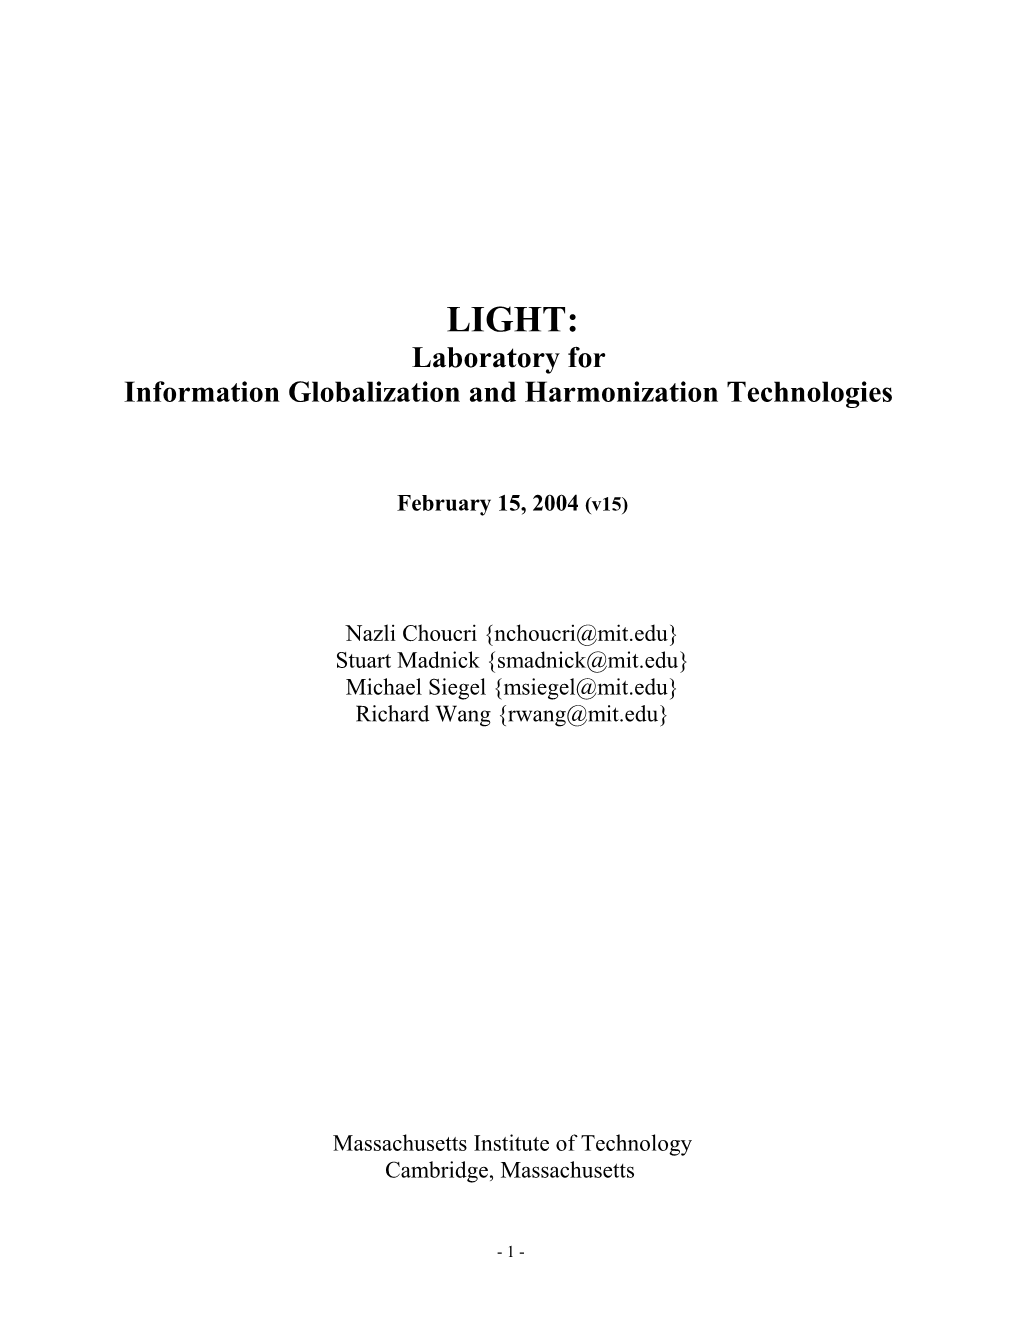 Information Globalization and Harmonization Technologies s1